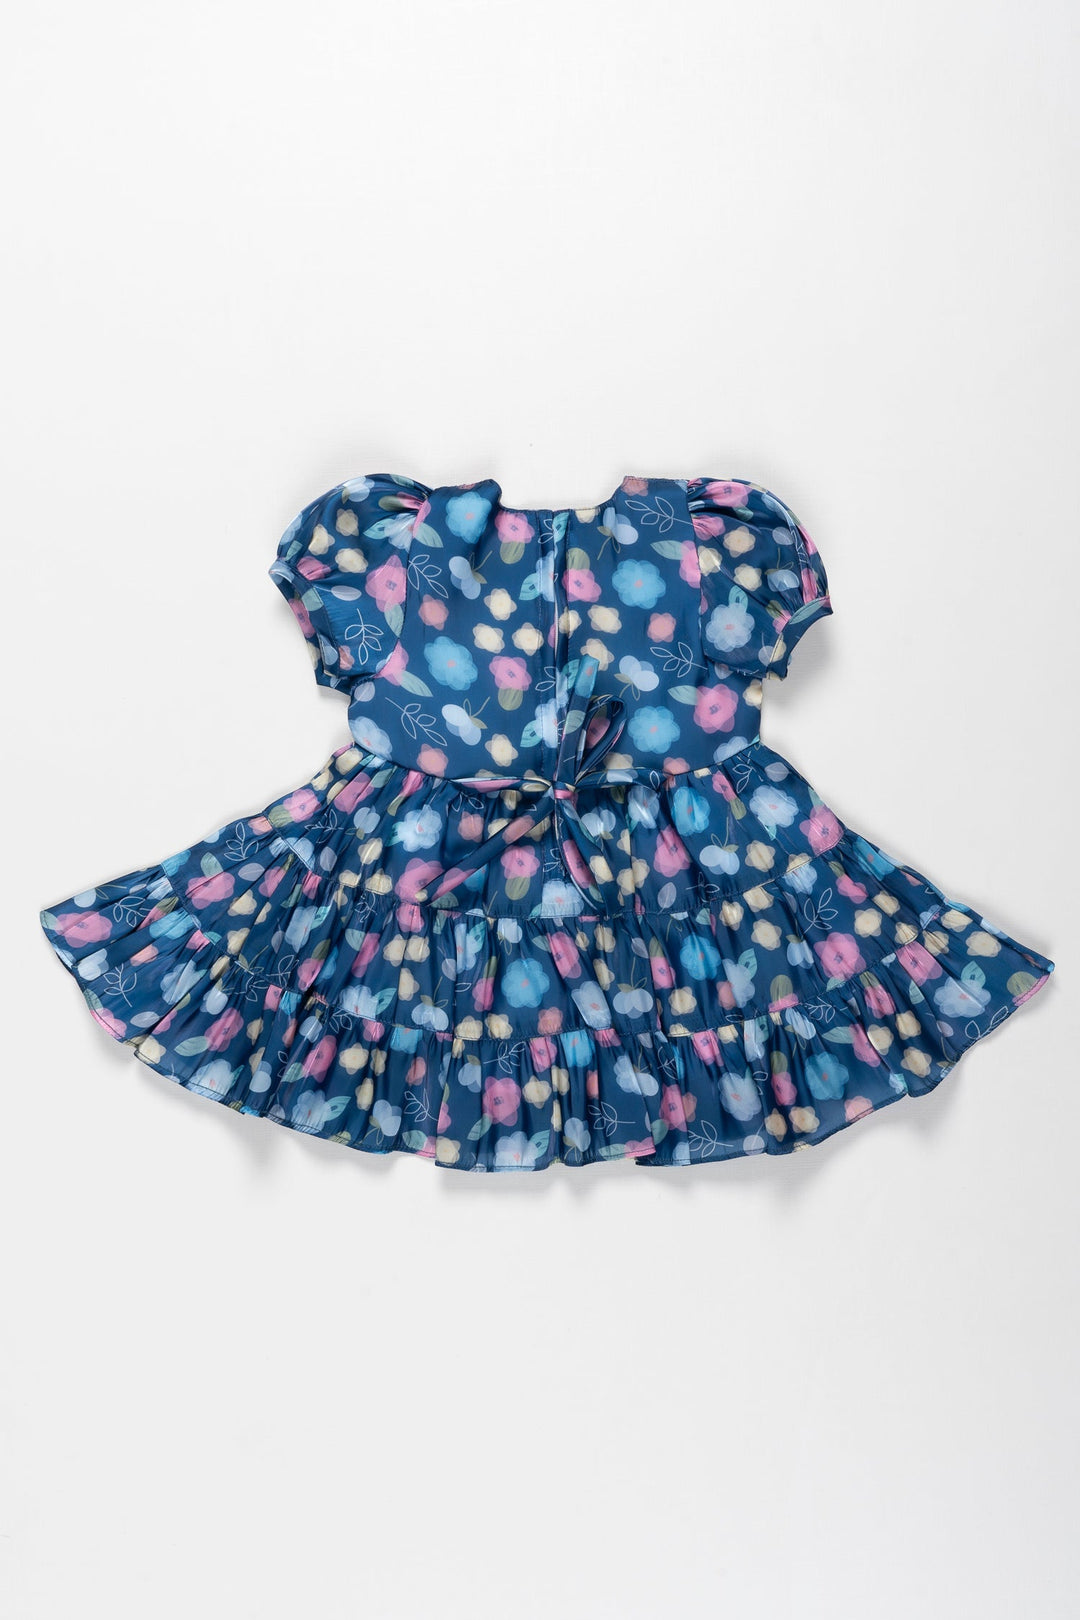 The Nesavu Baby Fancy Frock Enchanted Garden Organza Dress for Baby Girls Nesavu Floral Organza Baby Girl Dress with Ruffles | Perfect Party Wear | The Nesavu